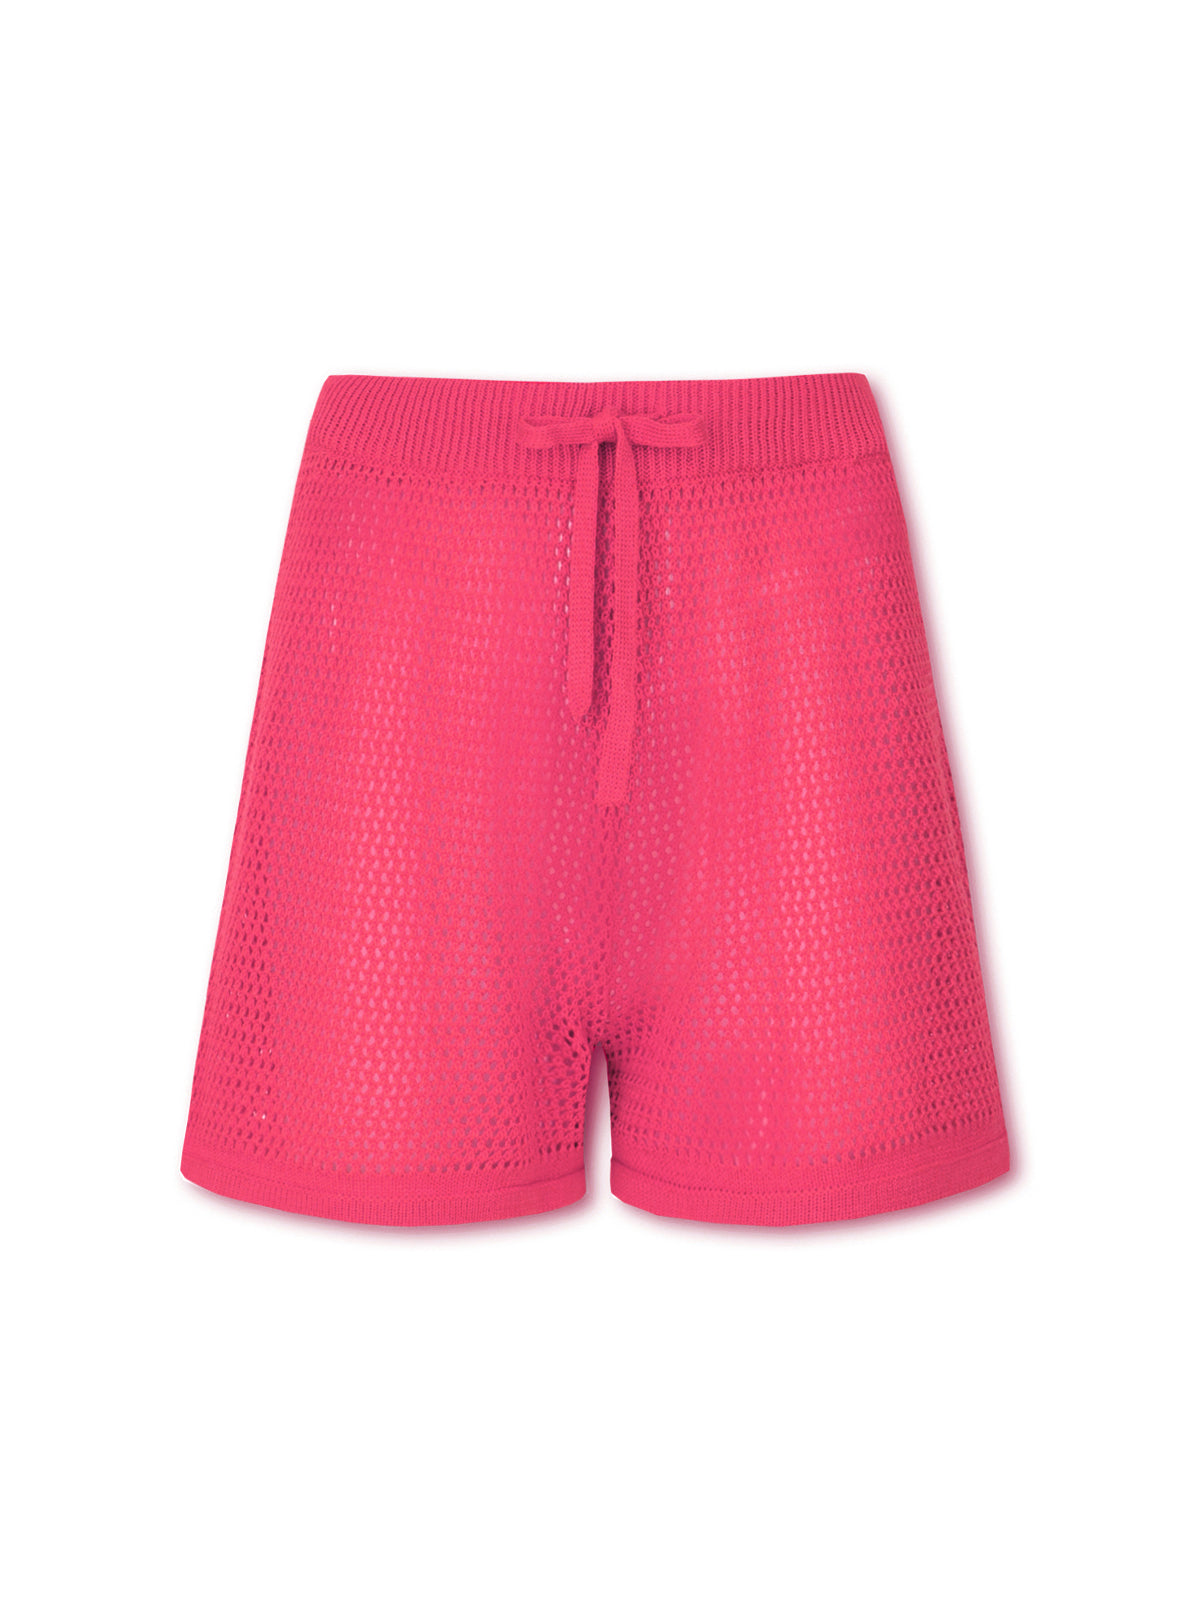 FINCH knit shorts - bold berry